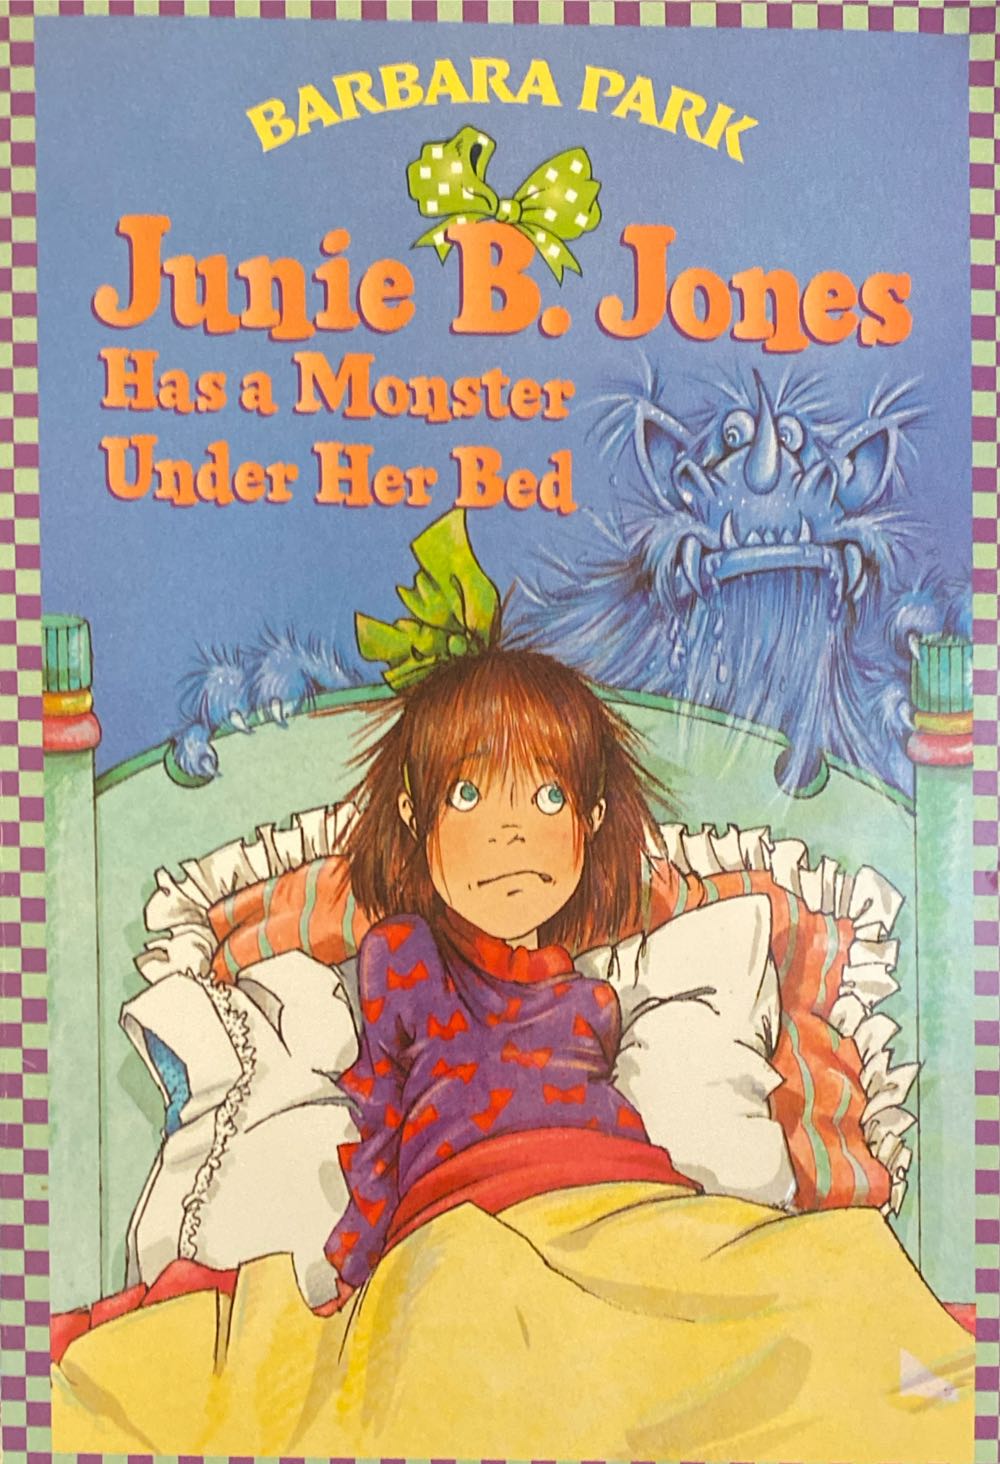 Junie B. Jones #8: Junie B. Jones Has a Monster Under Her Bed - Barbara Park (Random House Children’s Books - Paperback) book collectible [Barcode 9780679866978] - Main Image 3